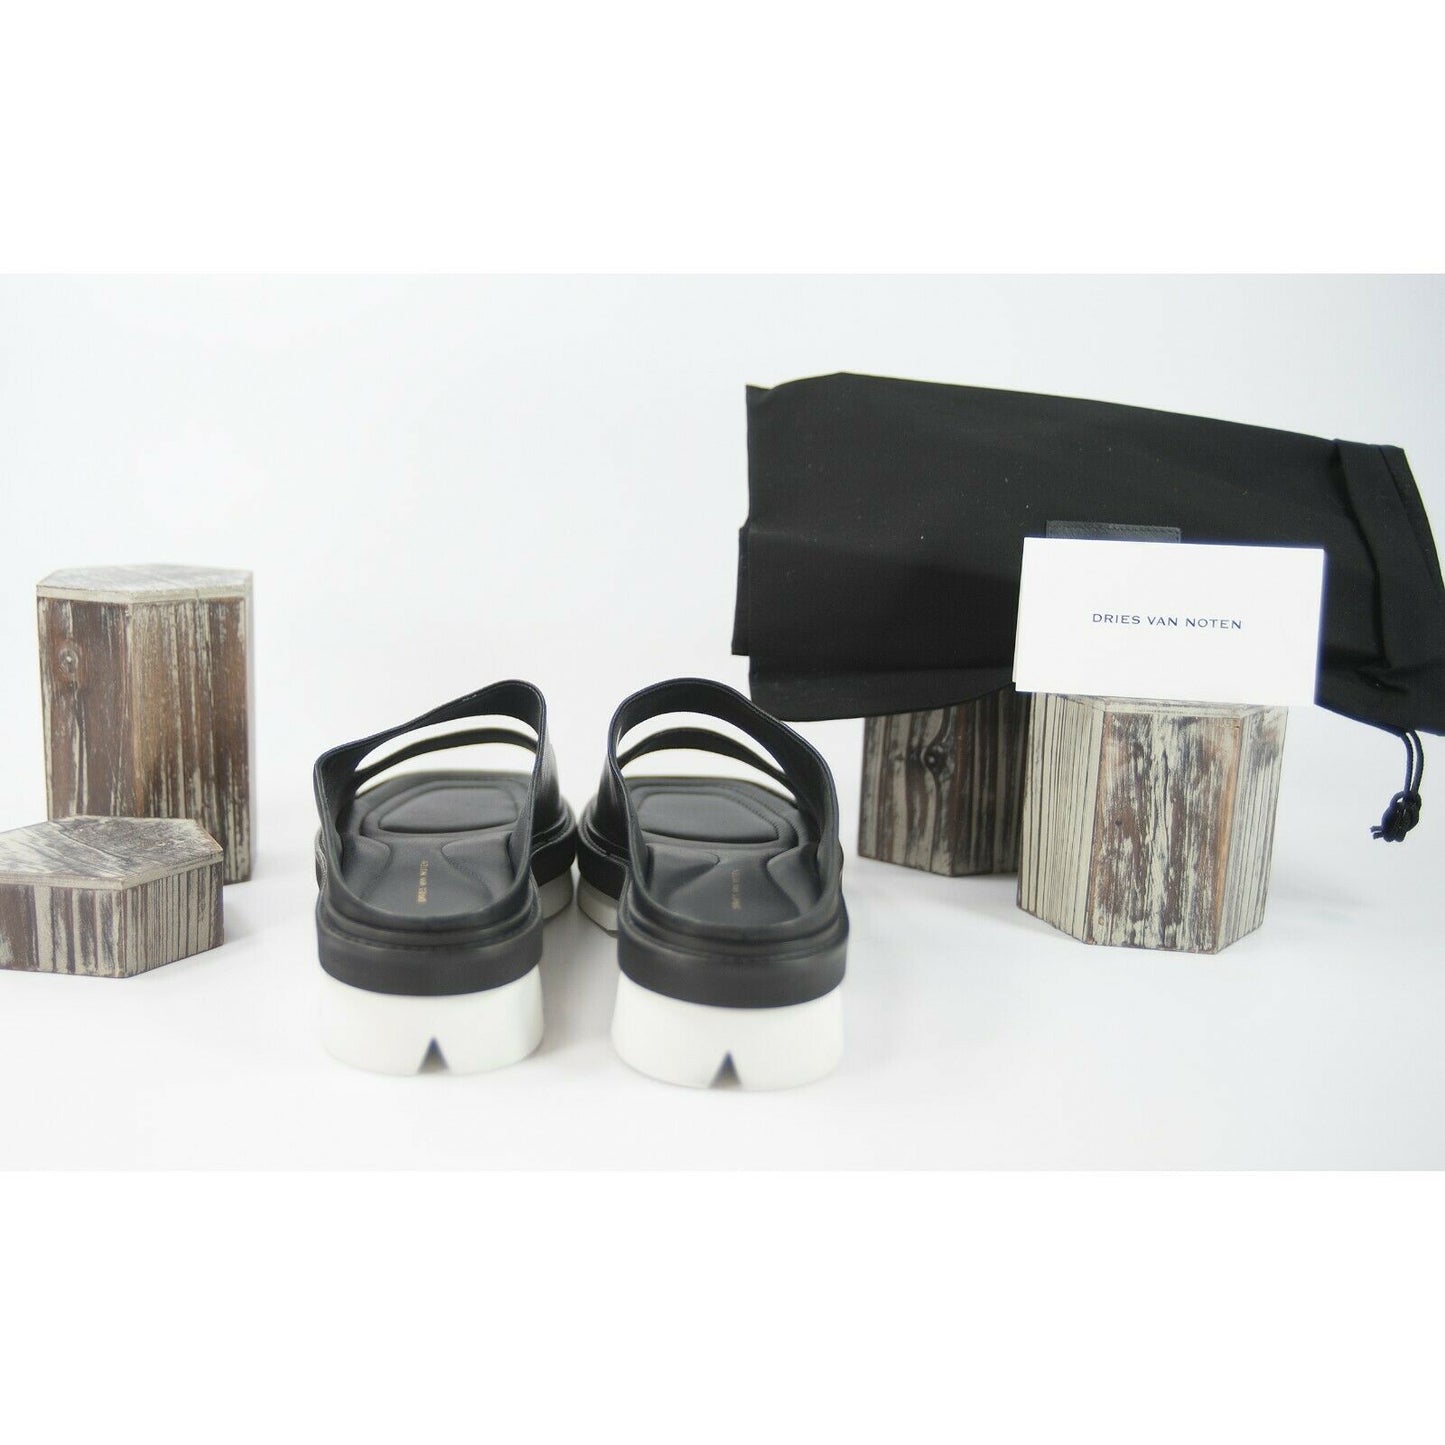 Dries Van Norten Black Calf Leather Cut Out Lug Sole Sandals Size 39.5 9.5 NIB